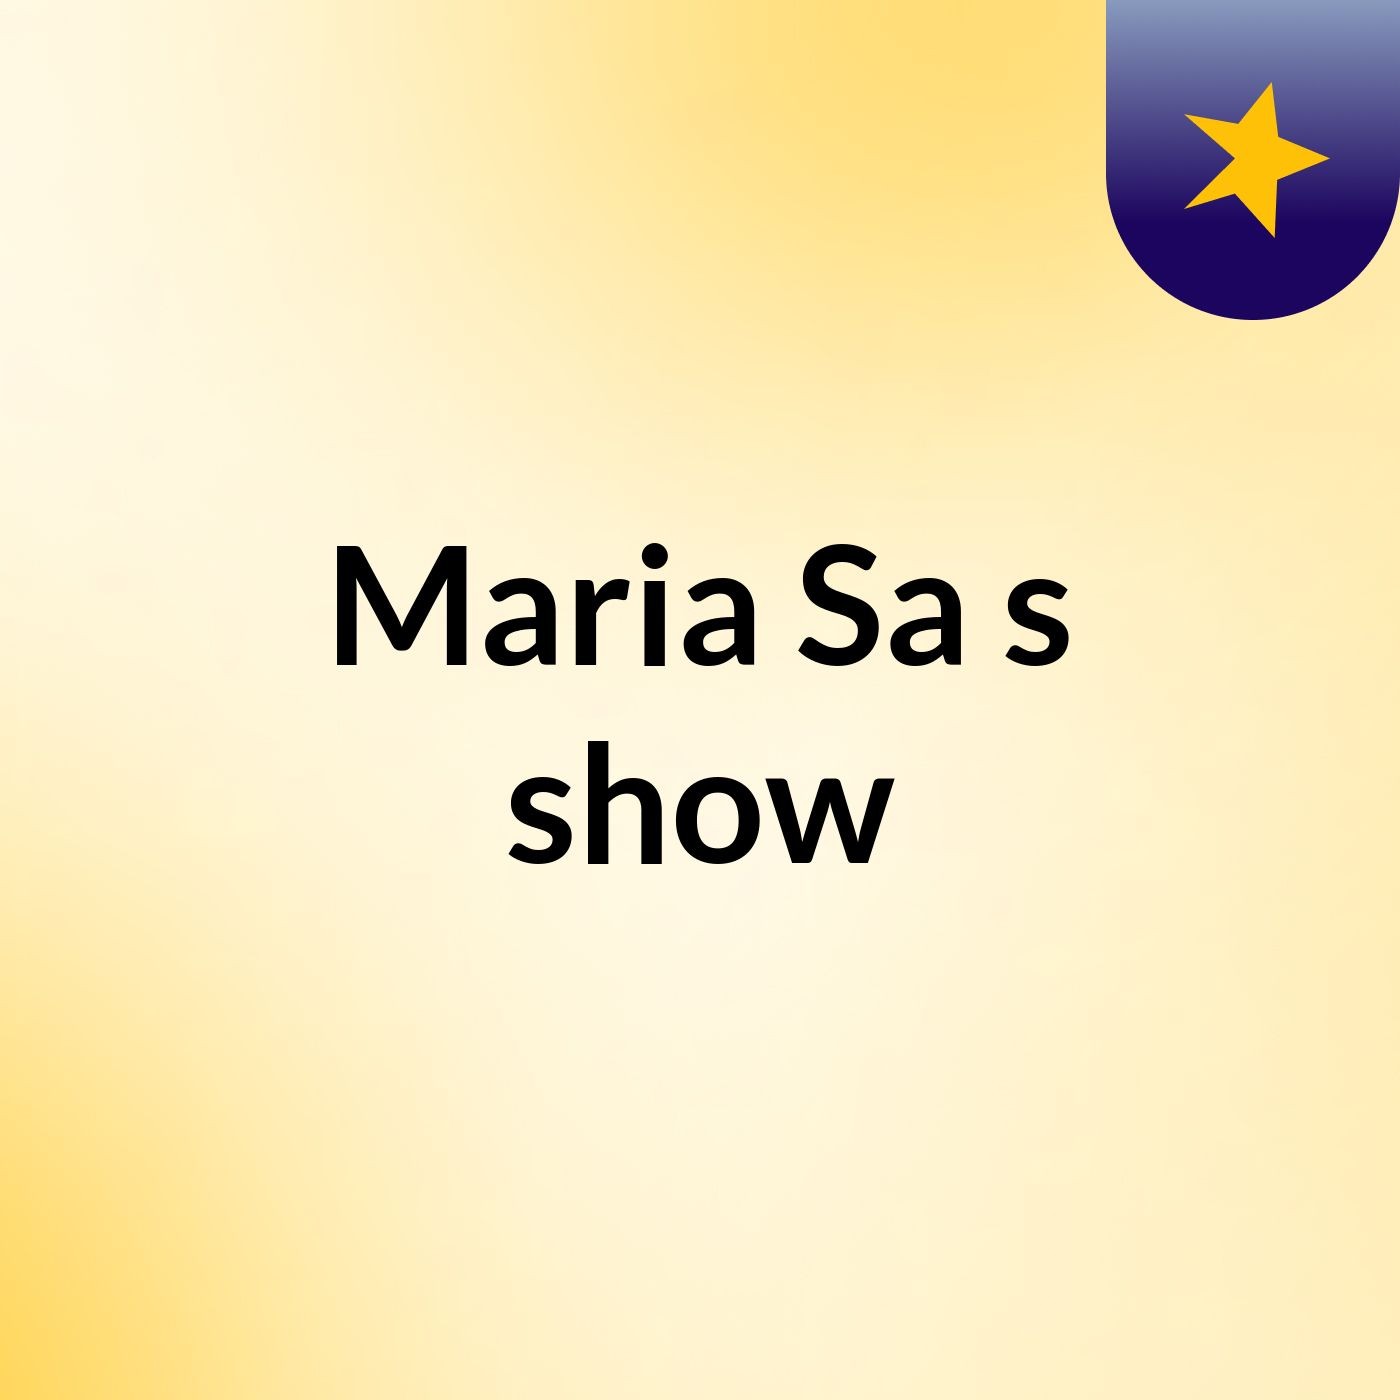 Maria Sa's show